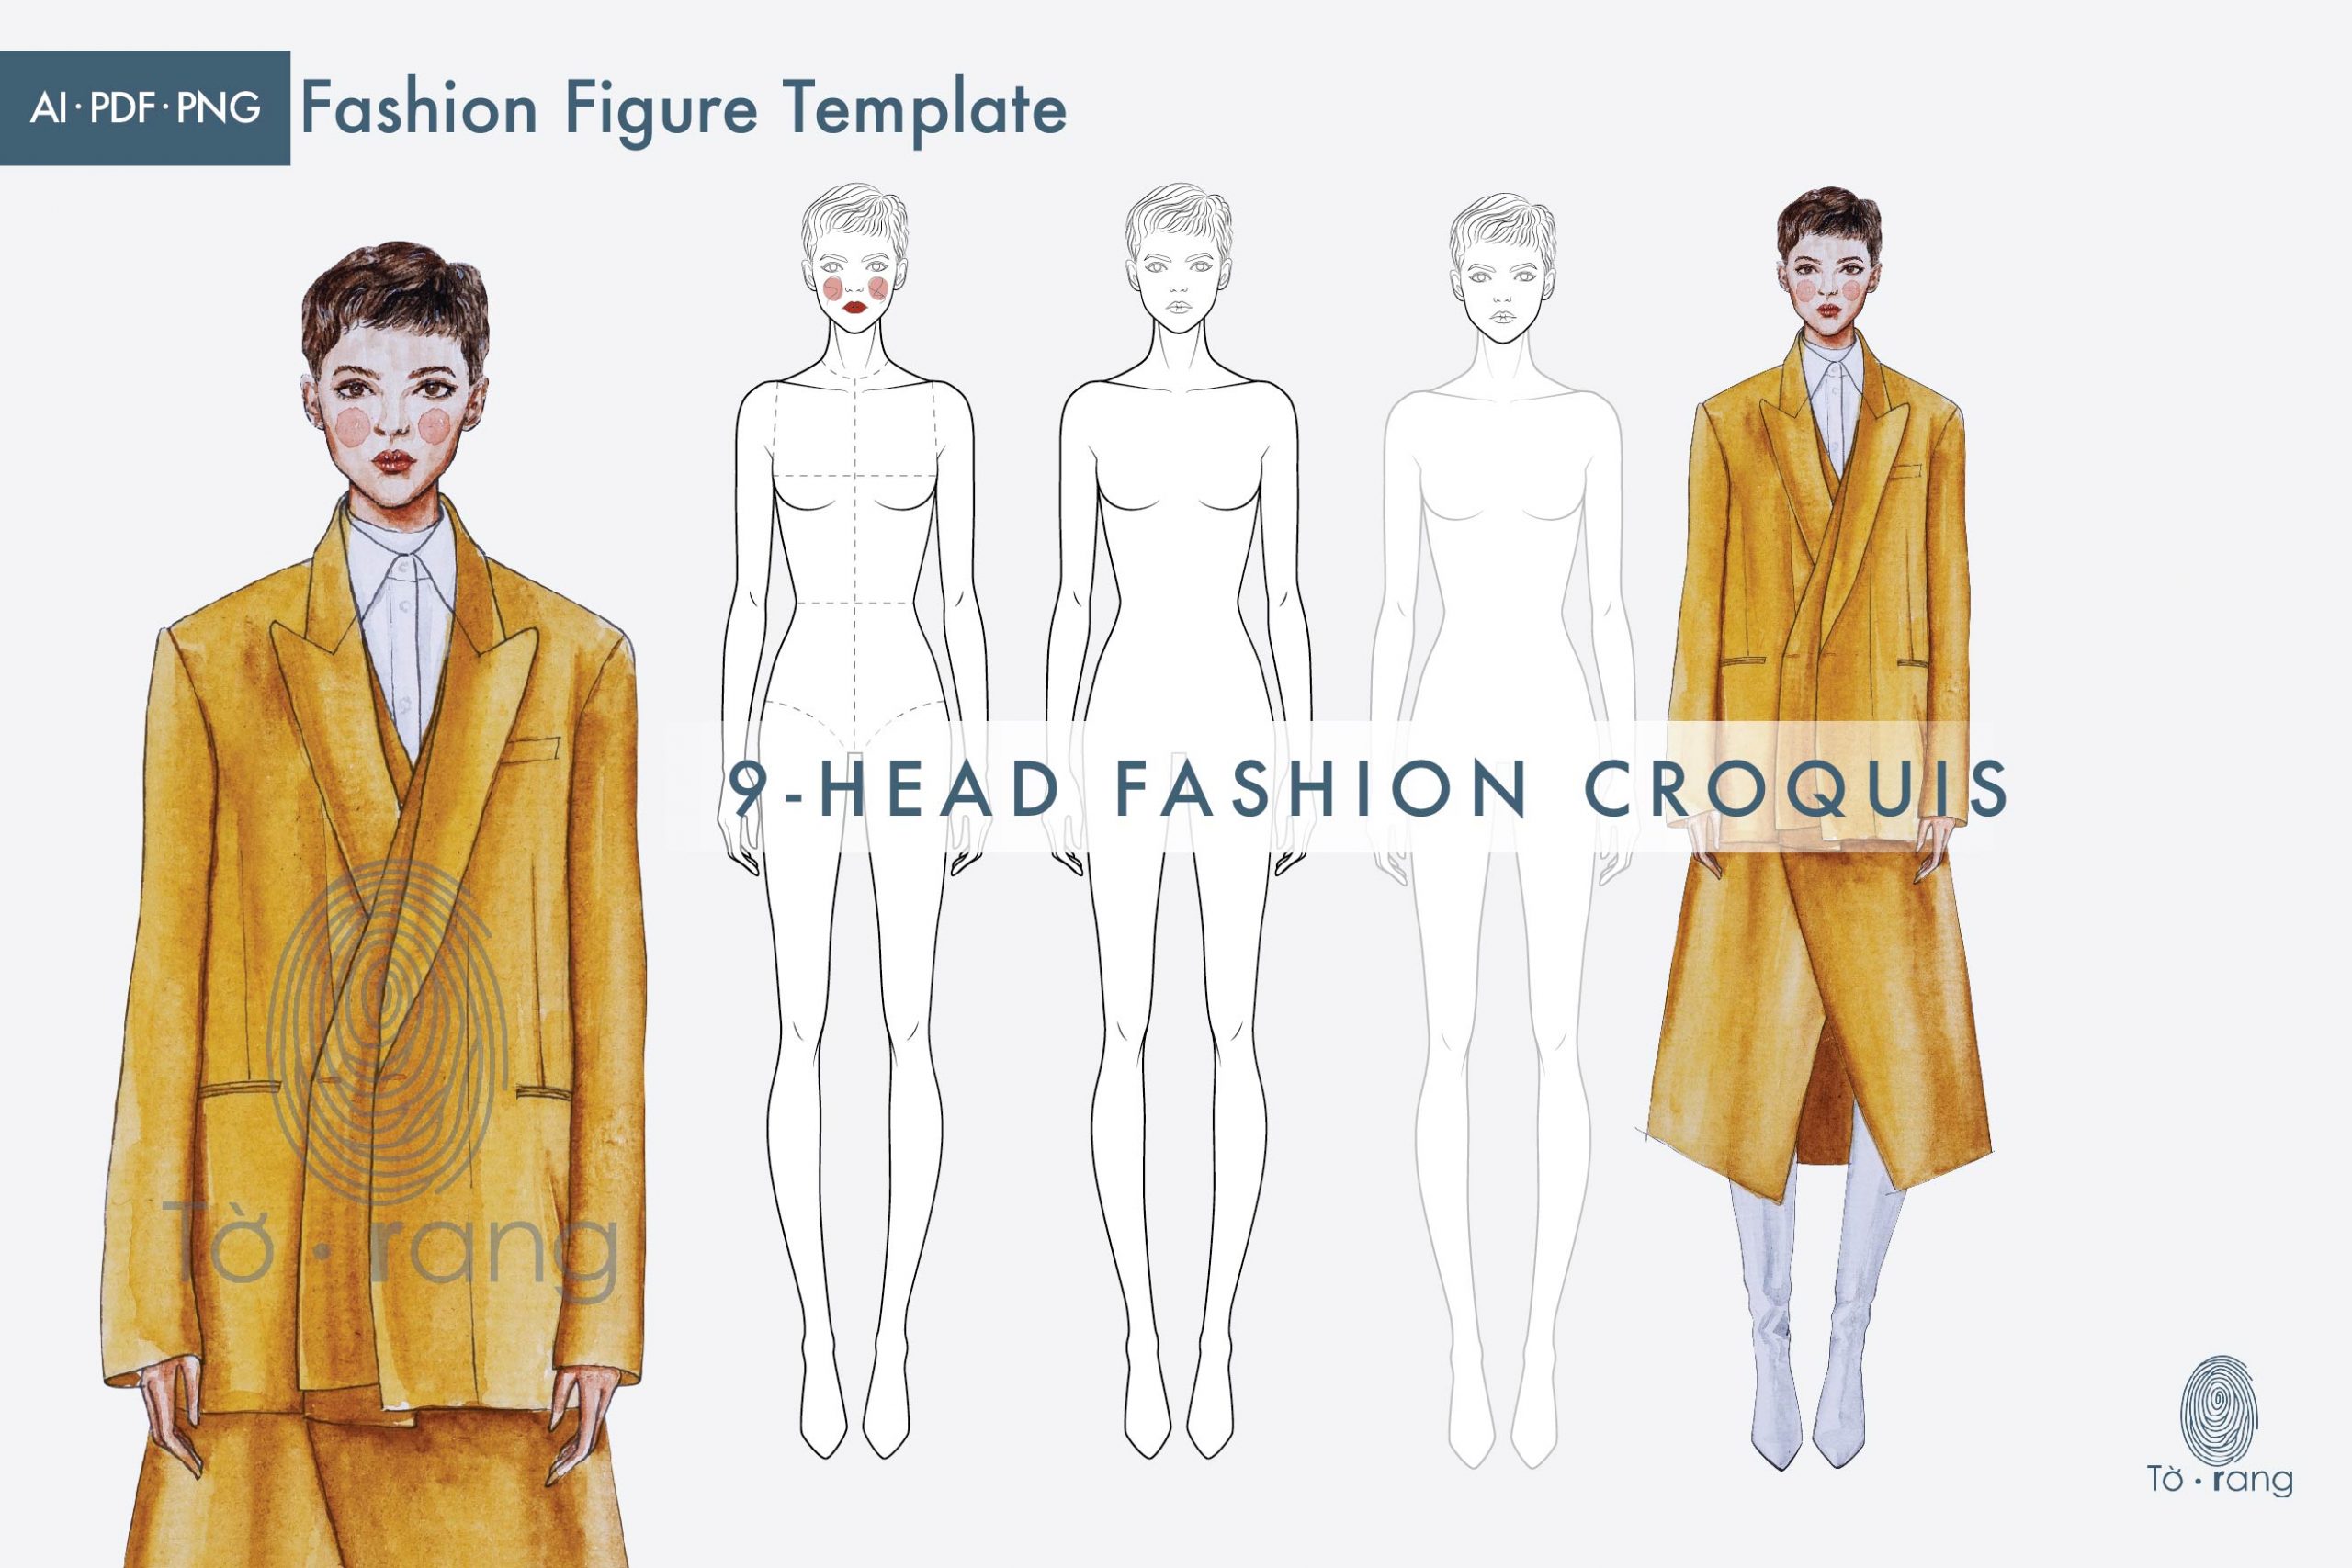 Male Fashion Croquis Template - Etsy | Fashion illustration poses, Croquis  fashion, Fashion illustration template